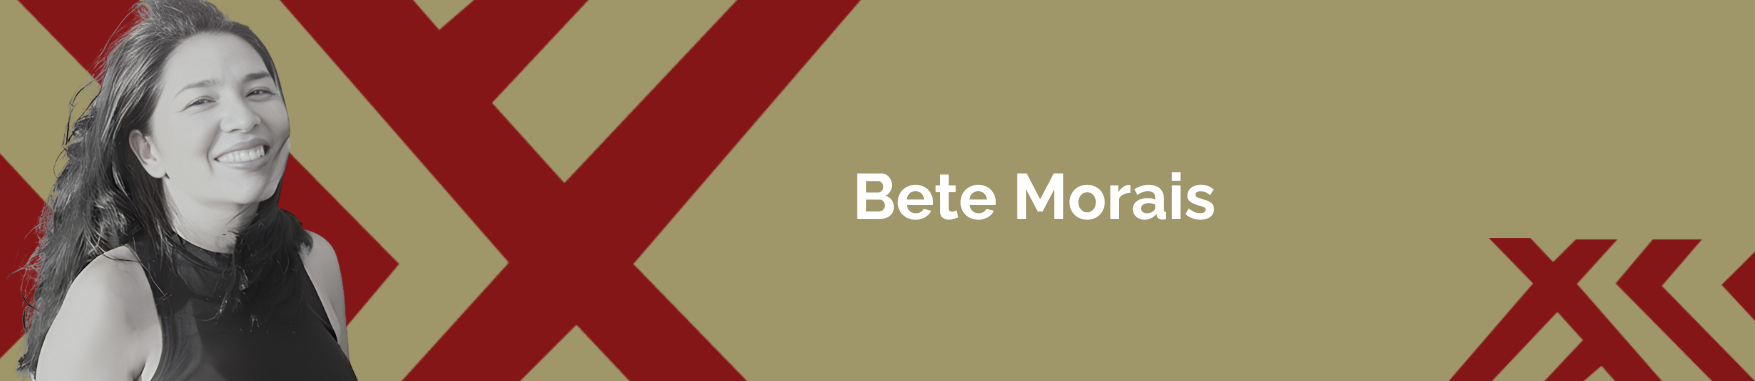 Bete Morais